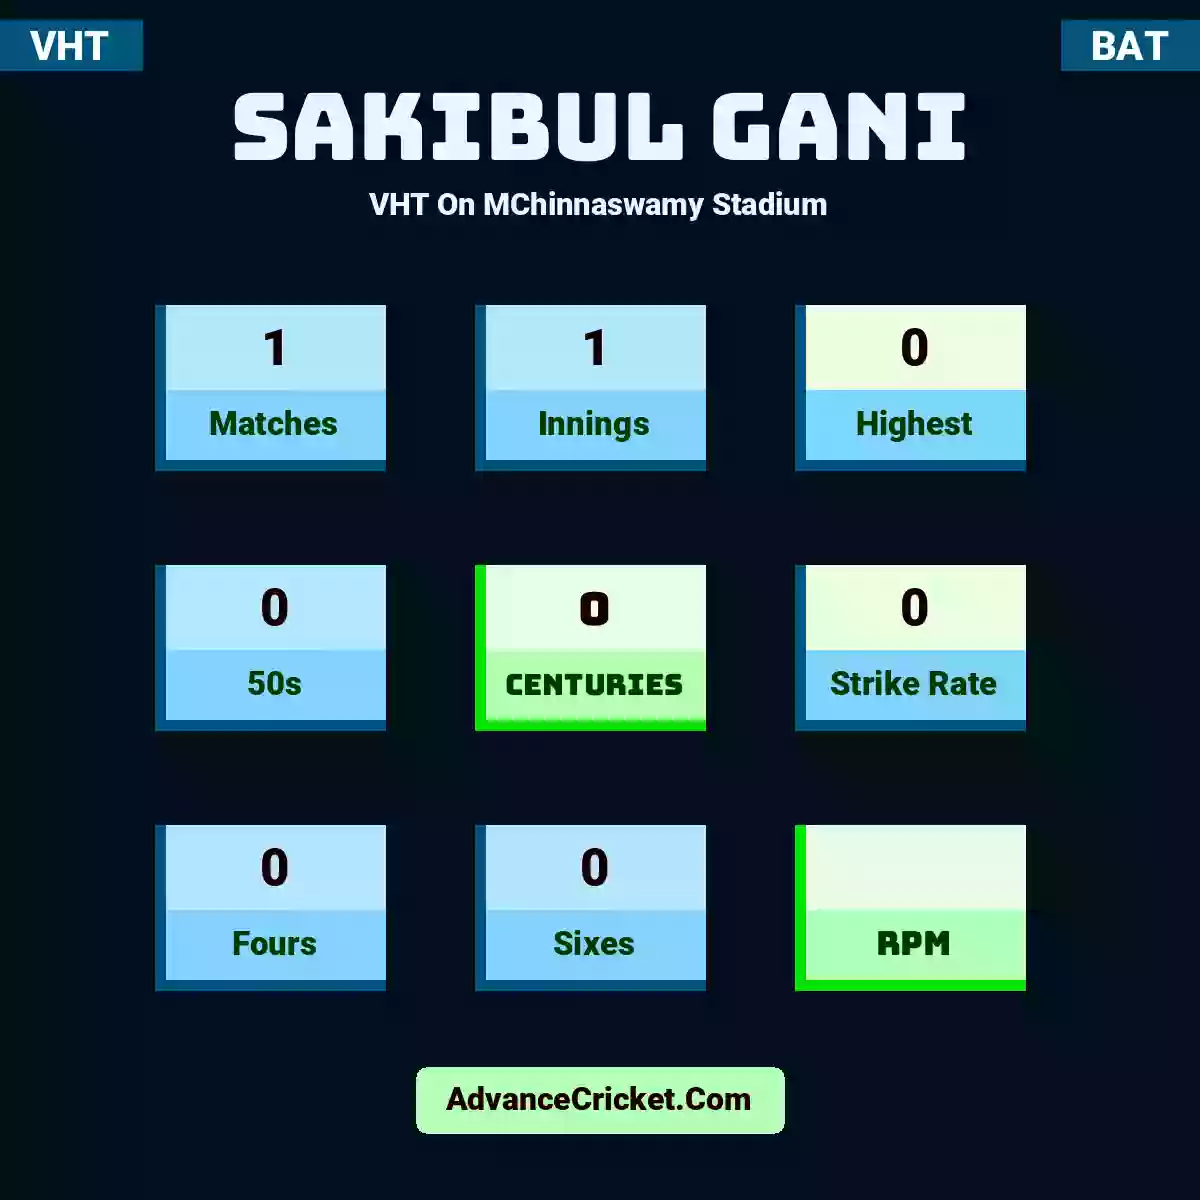 Sakibul Gani VHT  On MChinnaswamy Stadium, Sakibul Gani played 1 matches, scored 0 runs as highest, 0 half-centuries, and 0 centuries, with a strike rate of 0. S.Gani hit 0 fours and 0 sixes.